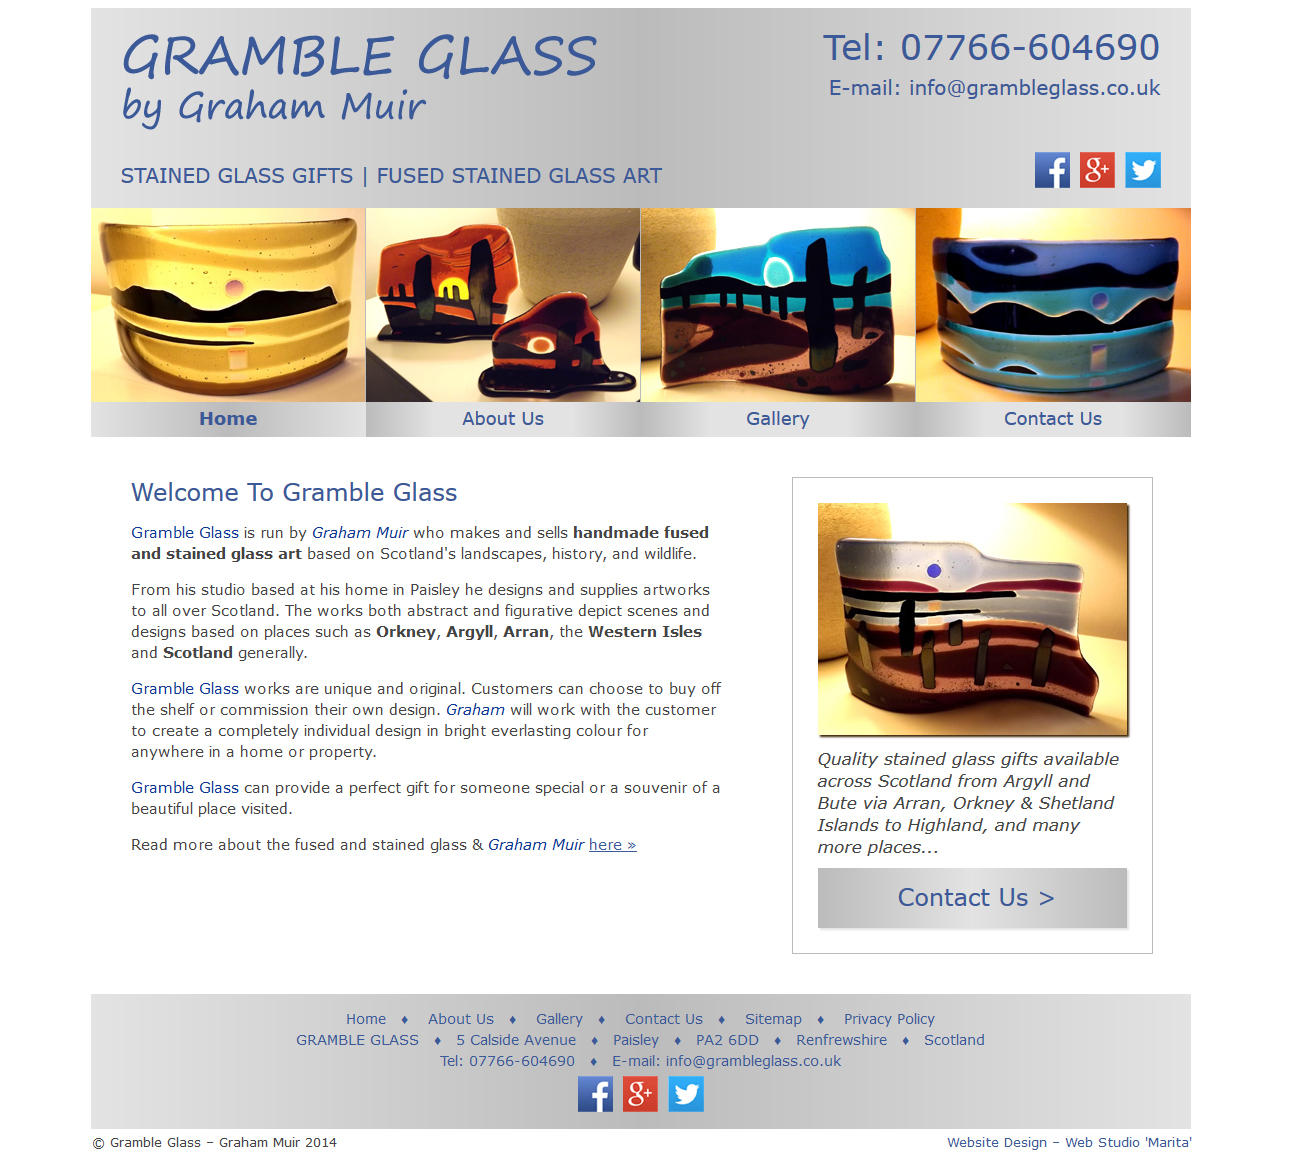 Gramble Glass By Web Studio Marita